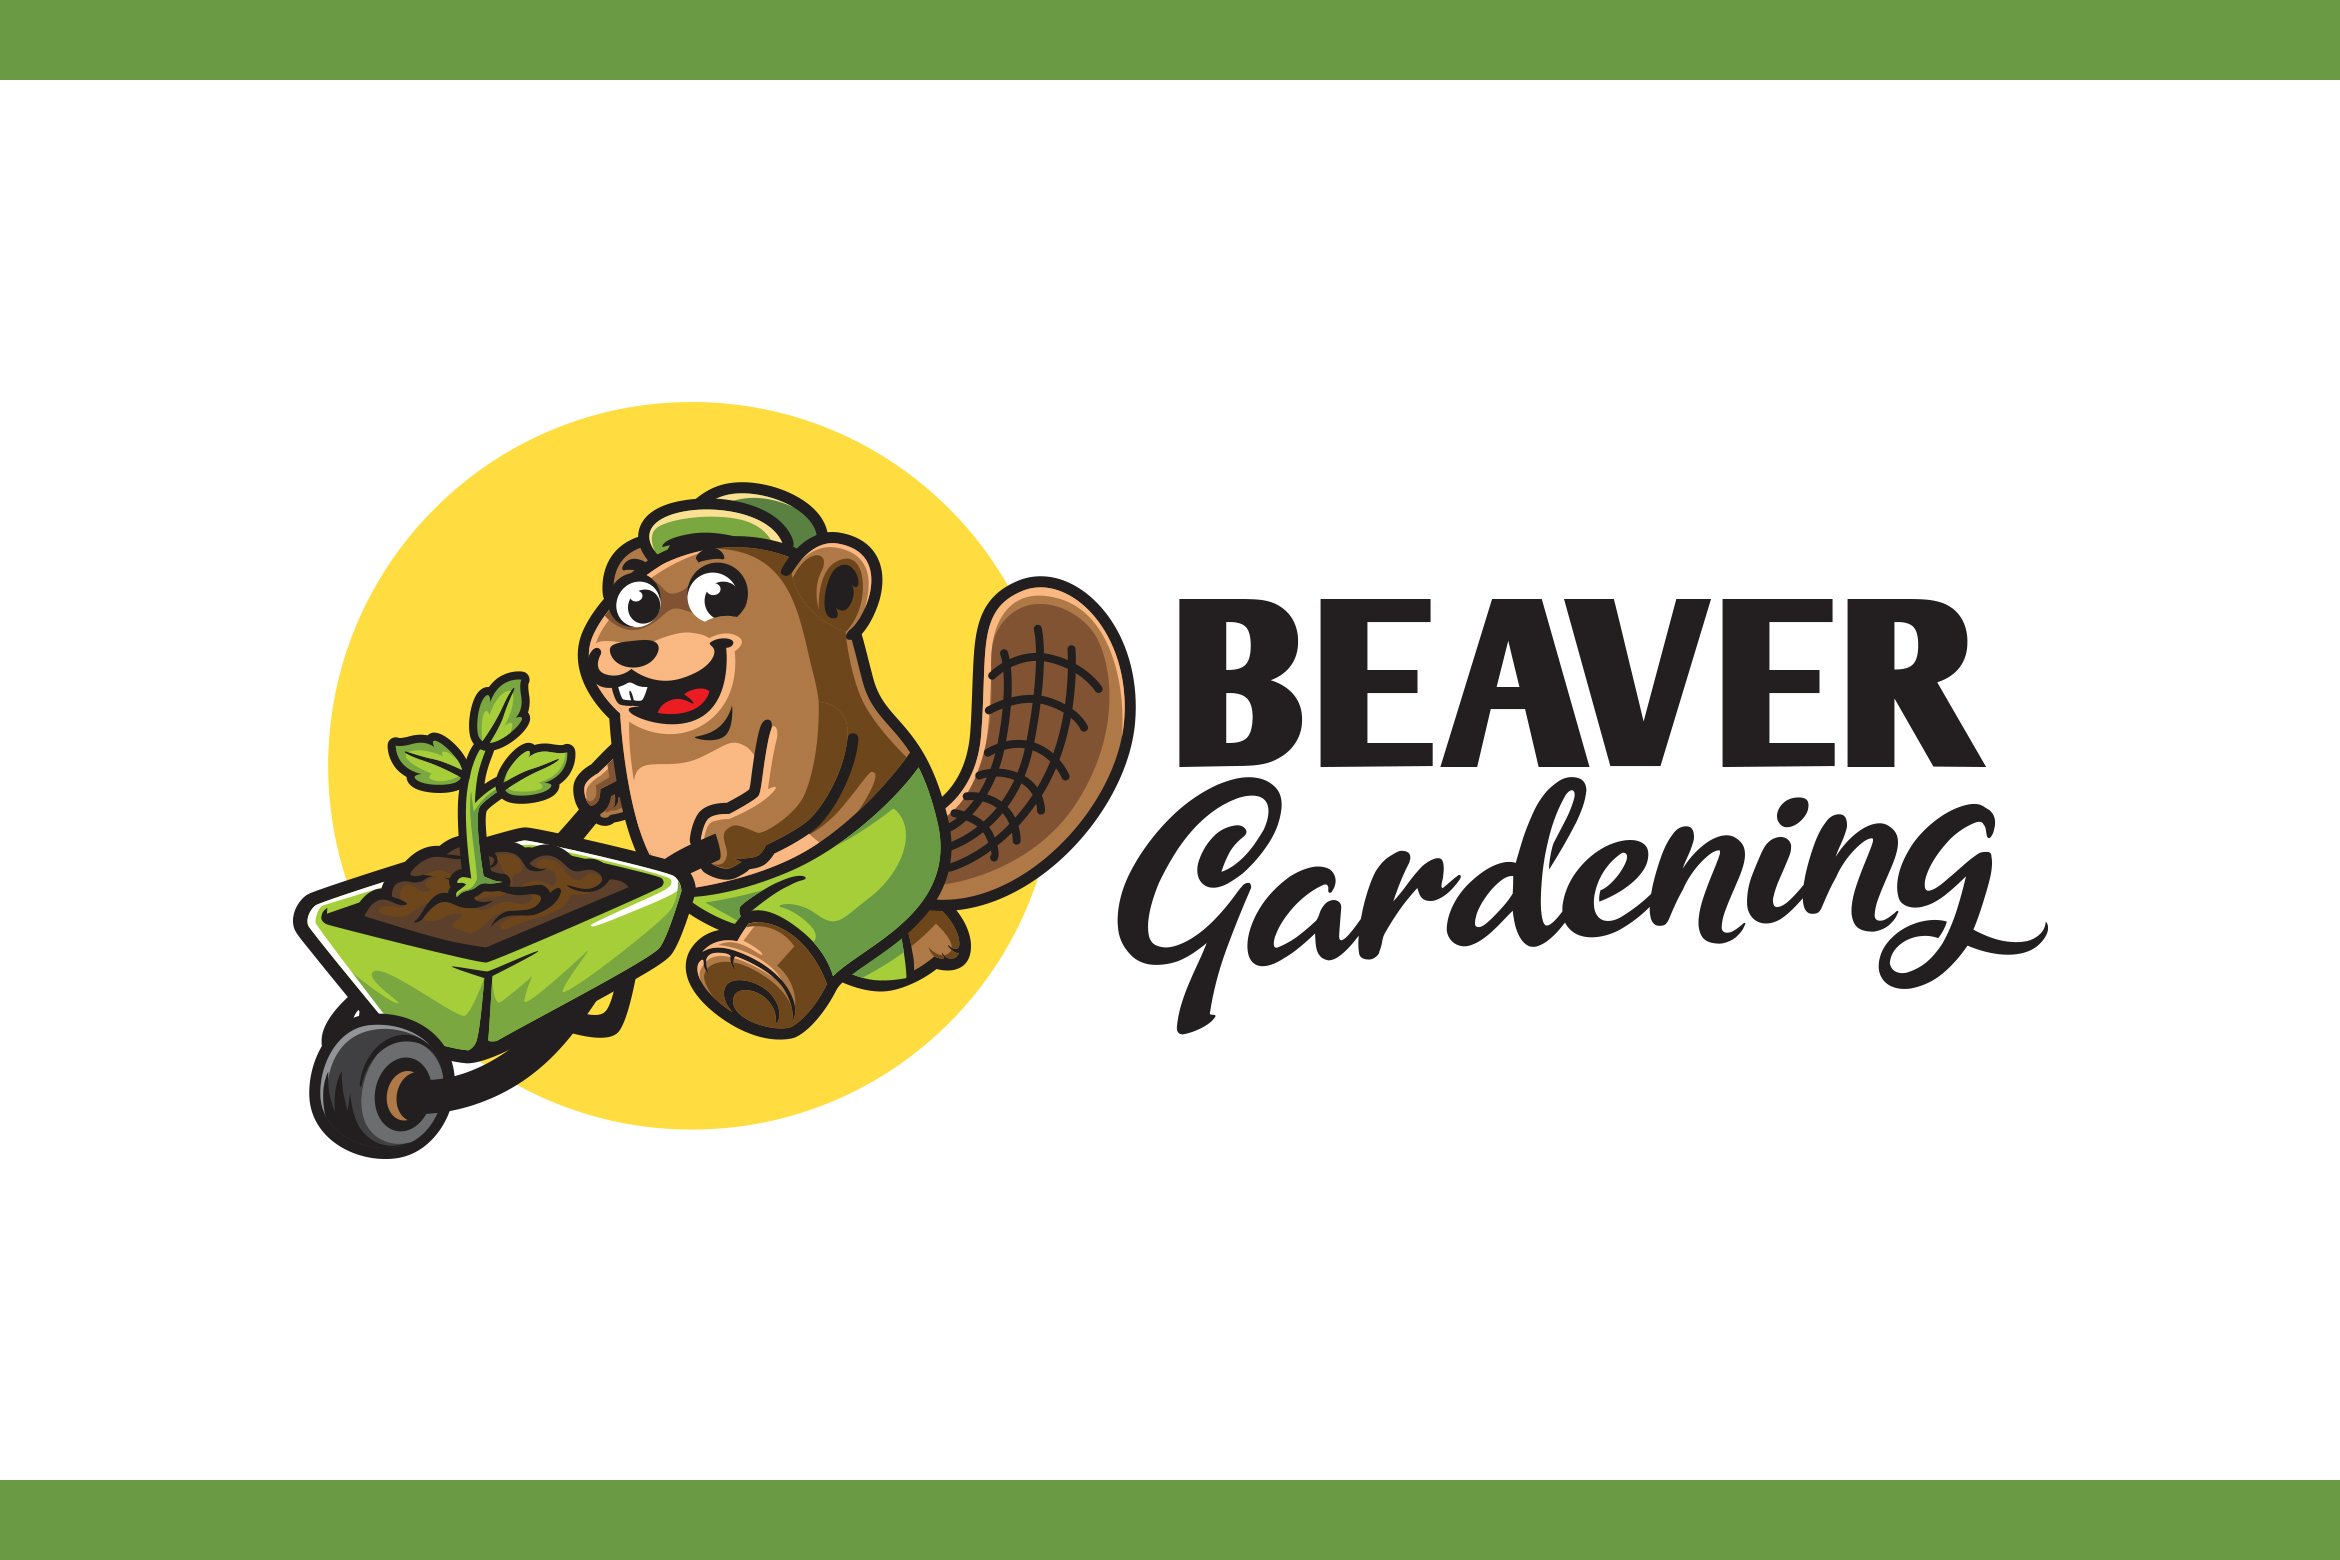 Beaver Gardening Logo cover image.